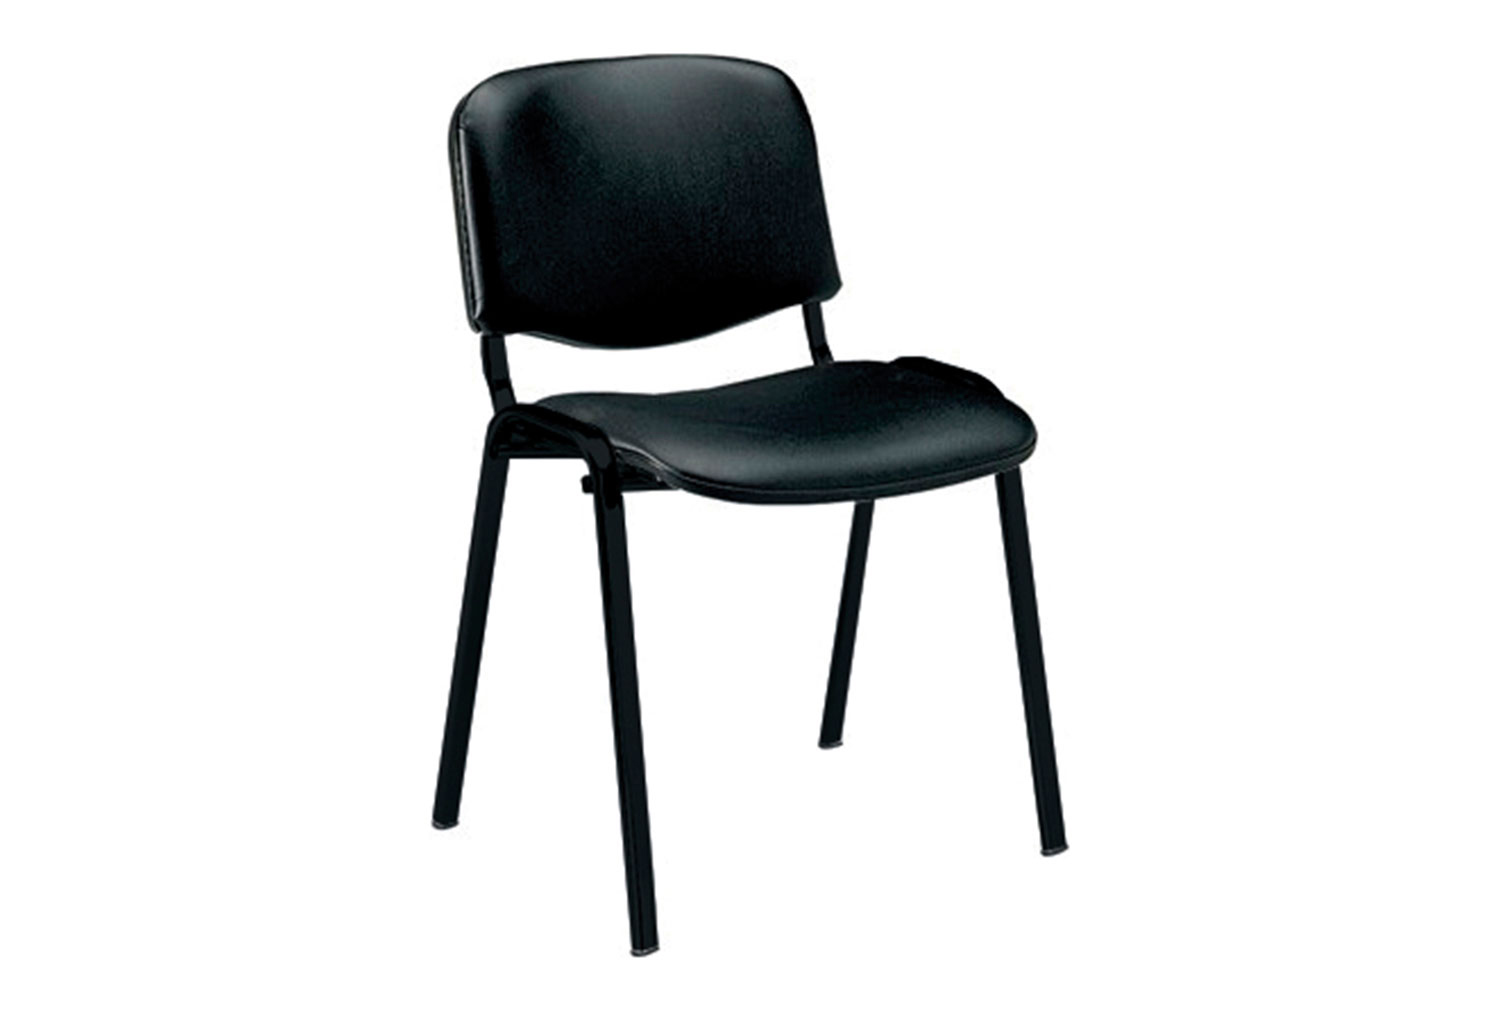 Qty 4 - Vogue Vinyl ISO Black Framed Stacking Conference Office Chair (Black), Black Frame, Black, Express Delivery